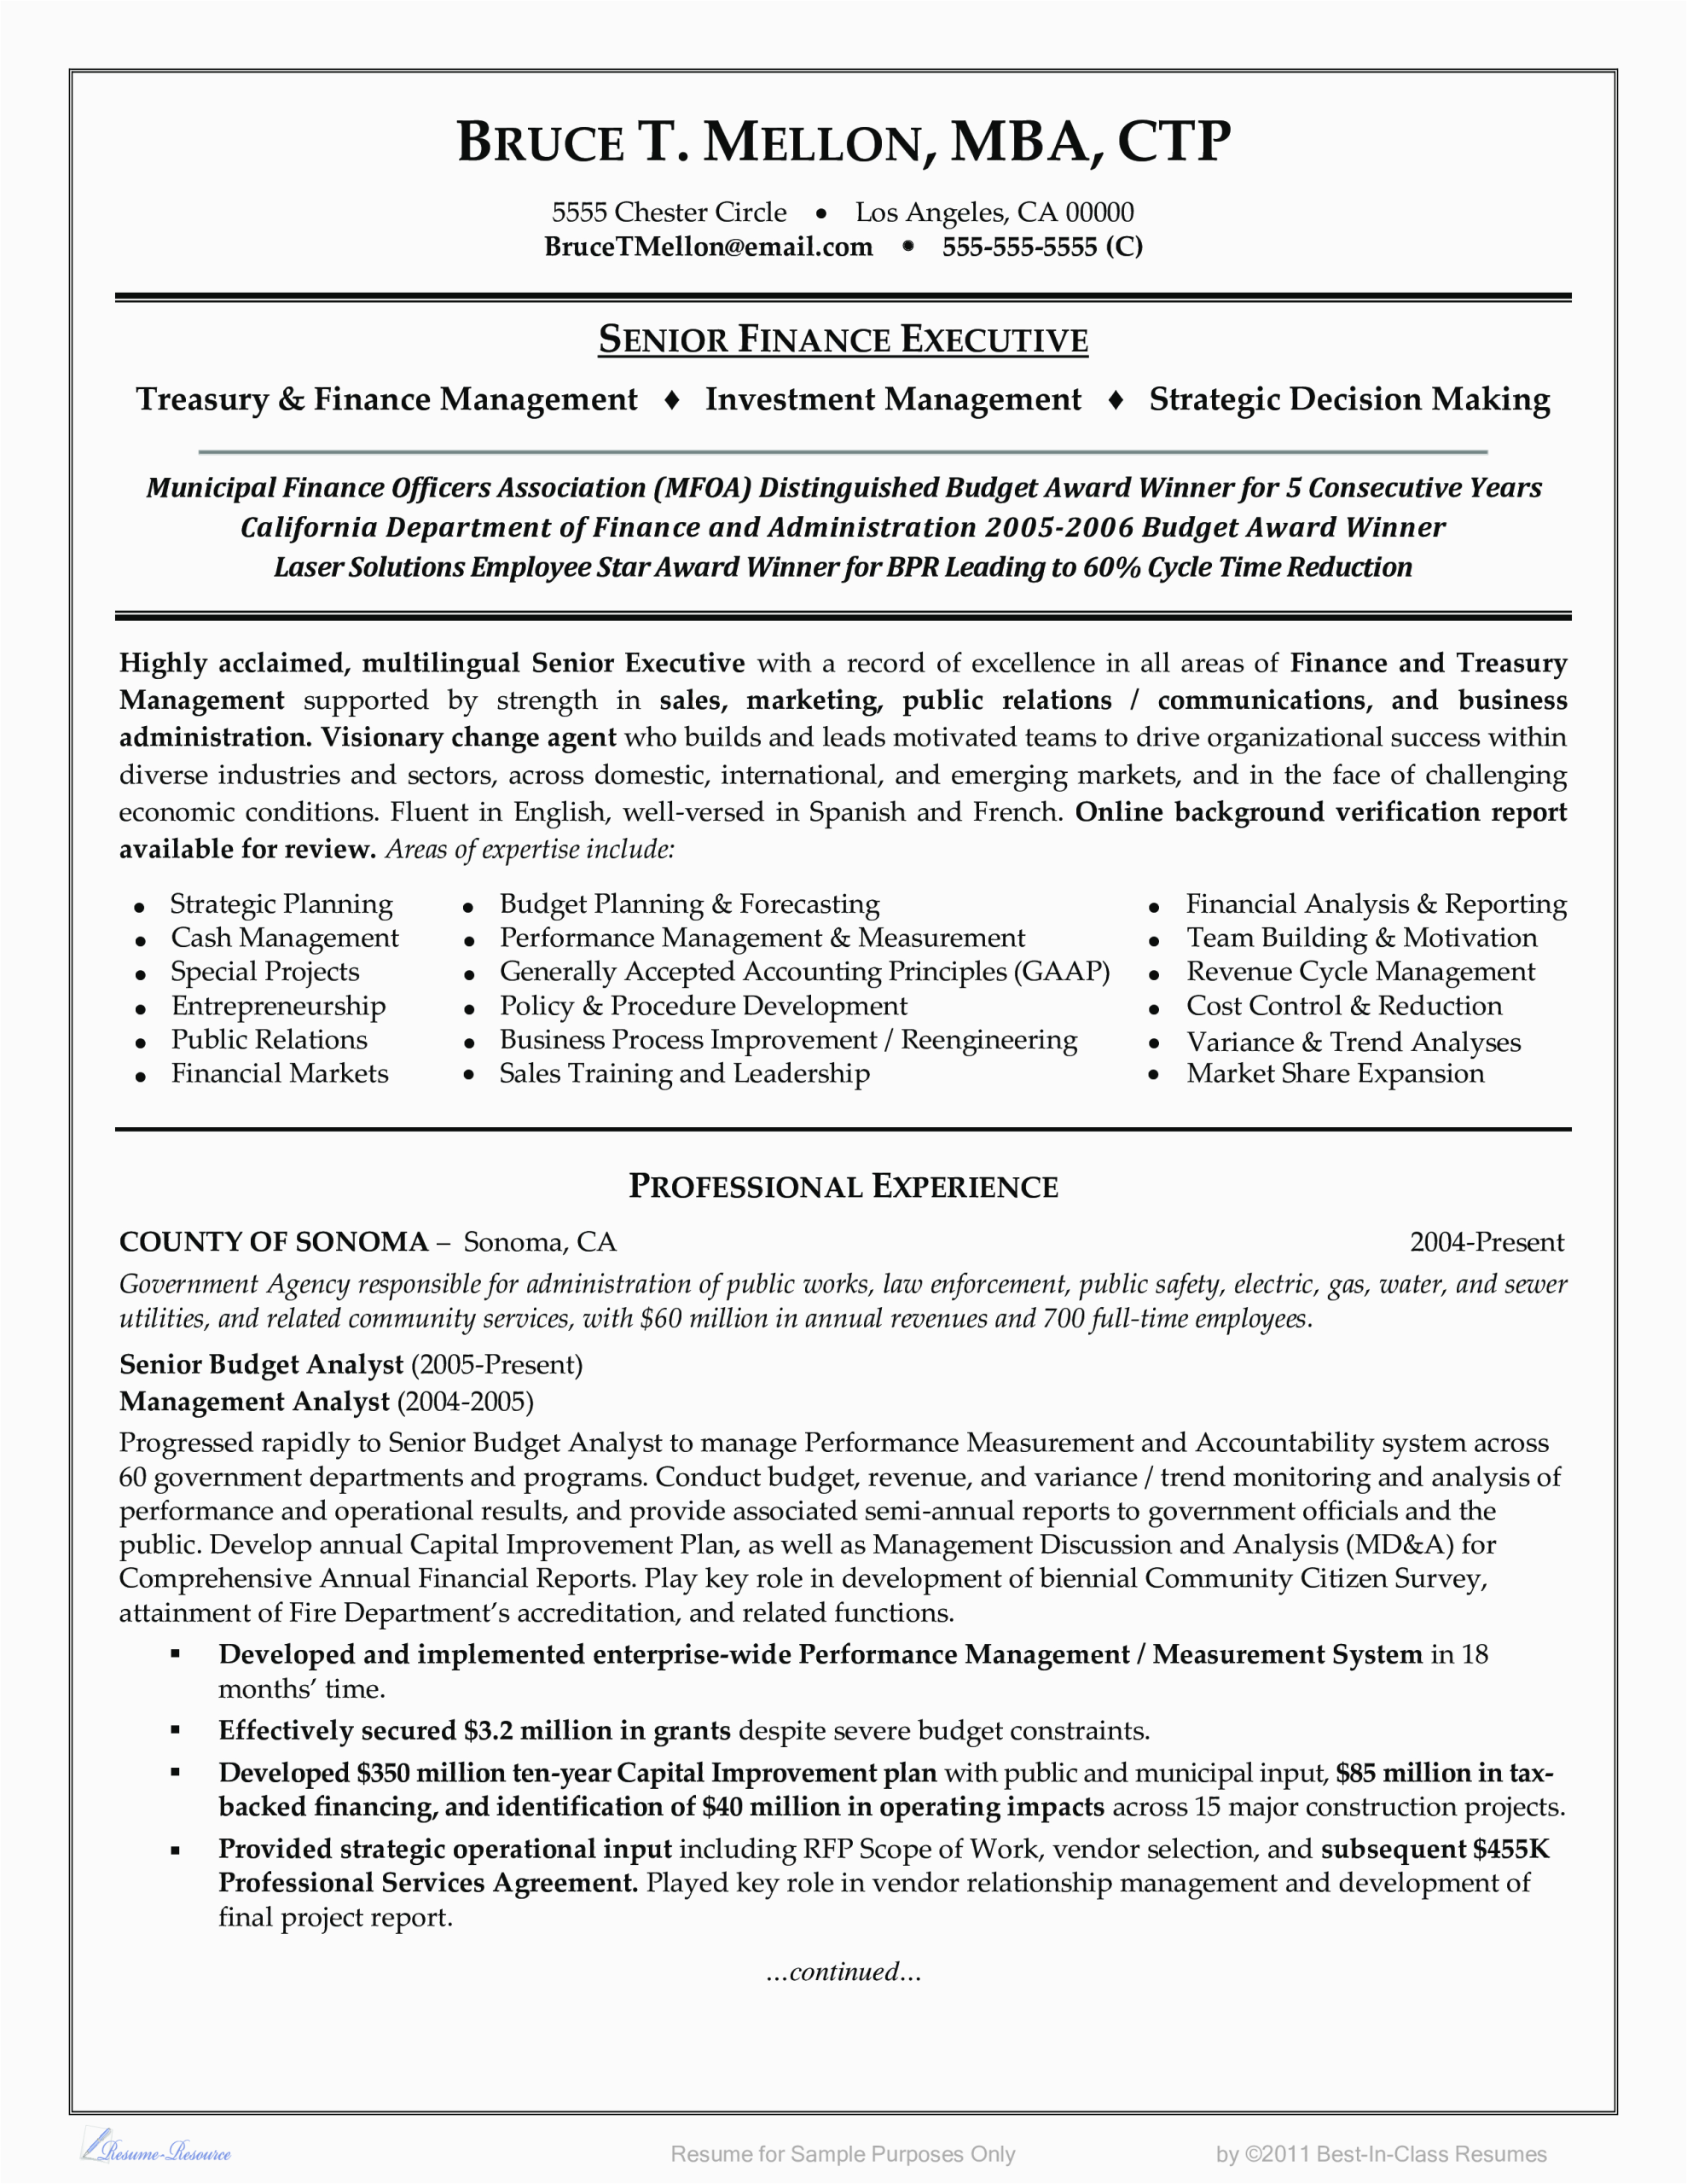 Sample Resume Of An Executive Finance Senior Financial Management Resume